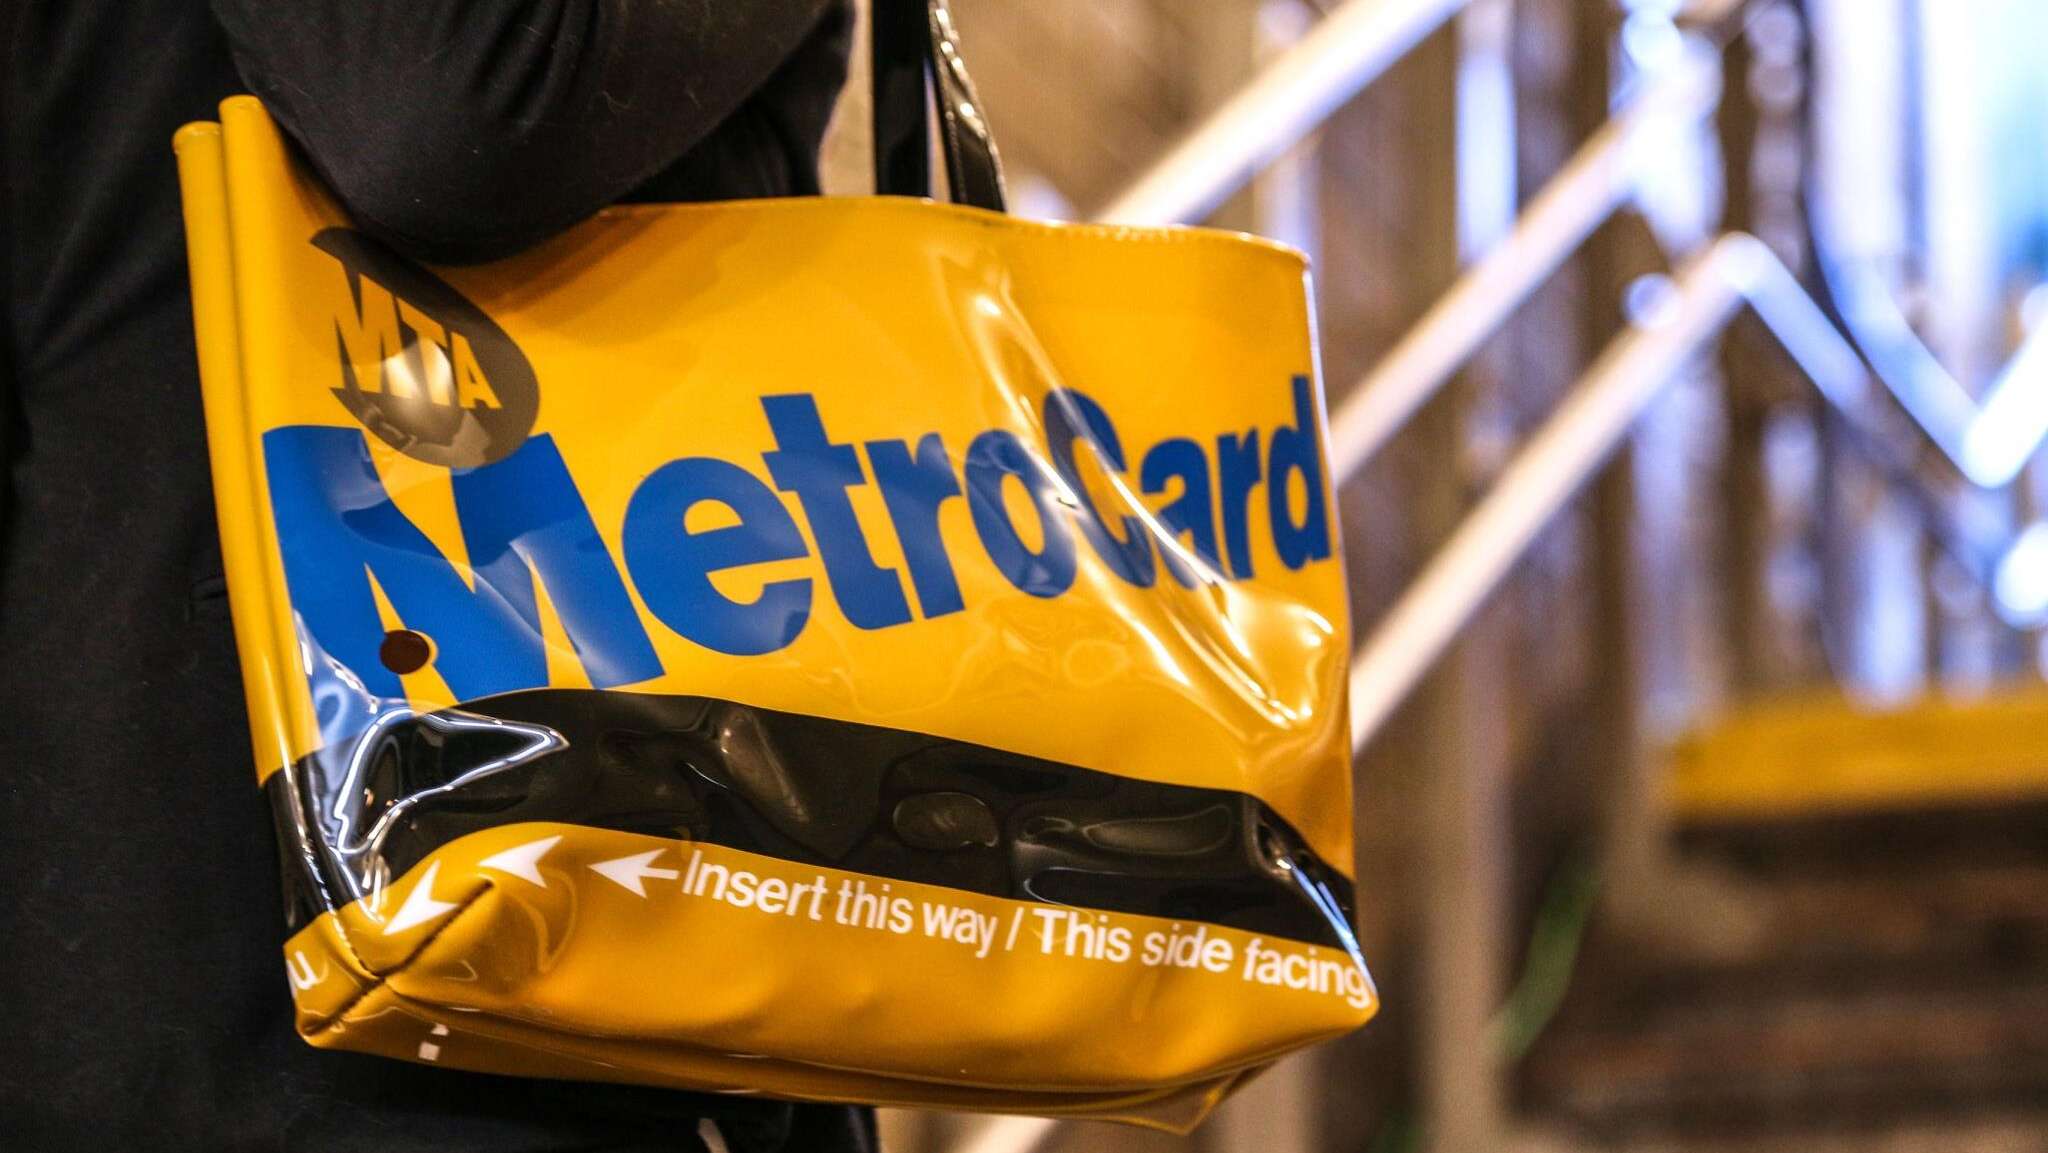 Yellow tote bag with metrocard logo